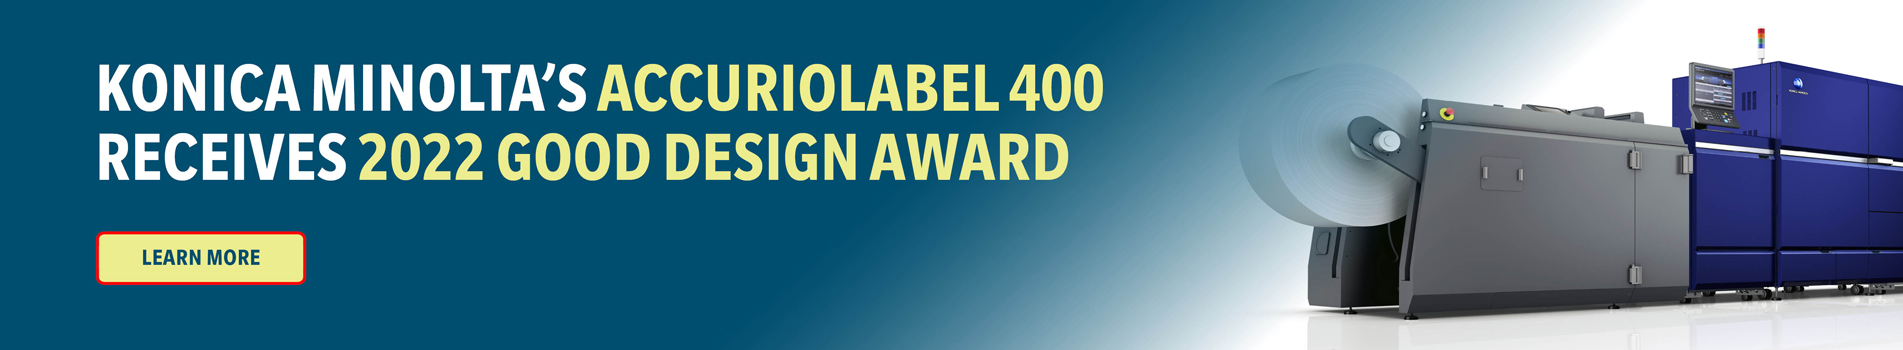 Konica Minolta’s AccurioLabel 400 Receives 2022 Good Design Award